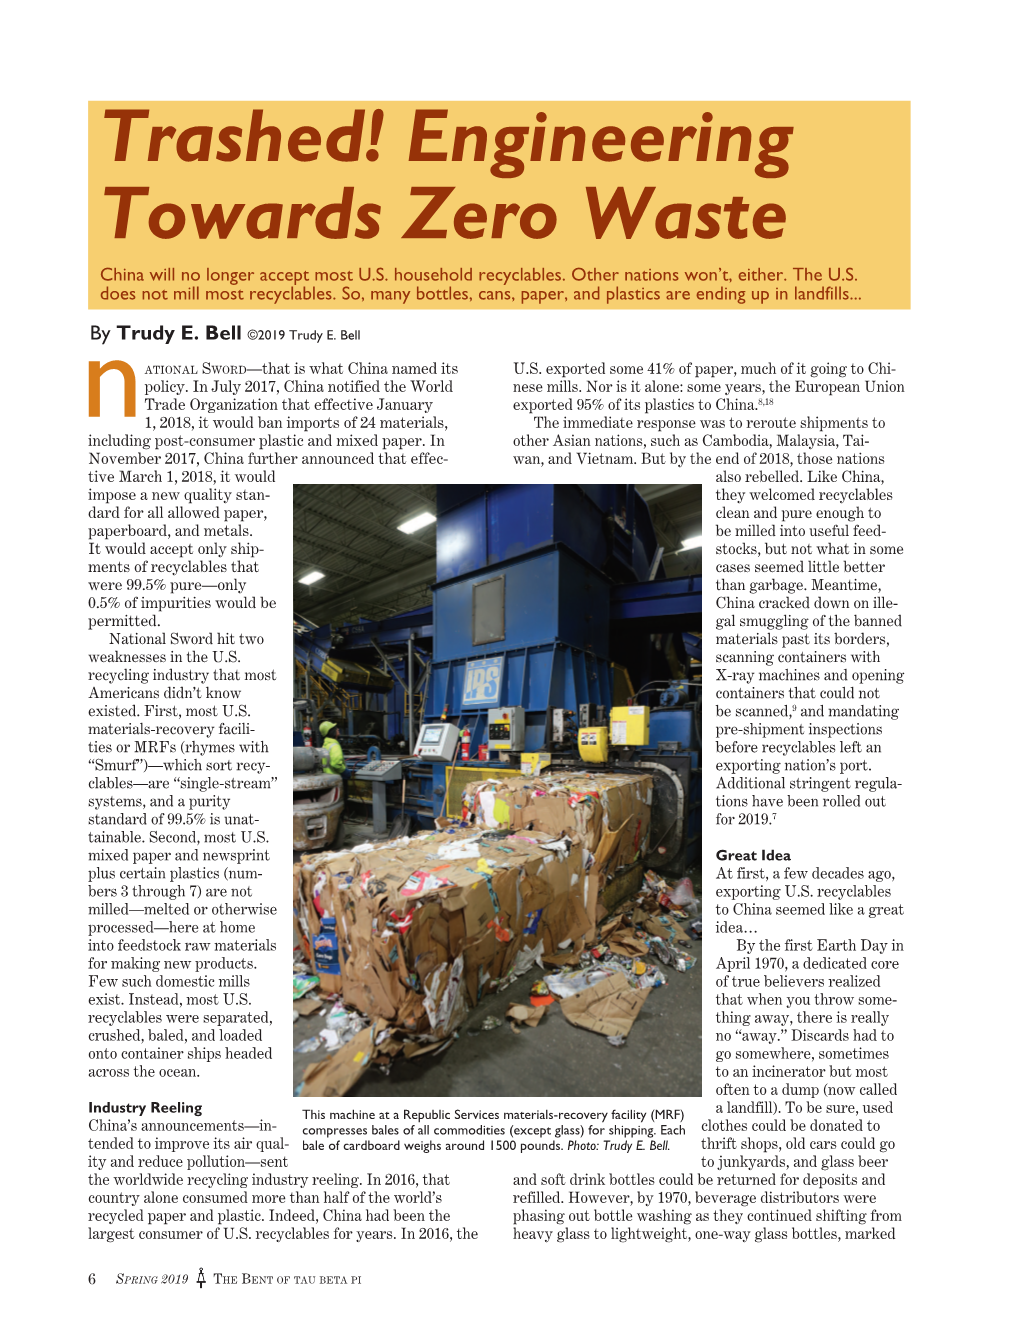 Trashed! Engineering Towards Zero Waste China Will No Longer Accept Most U.S